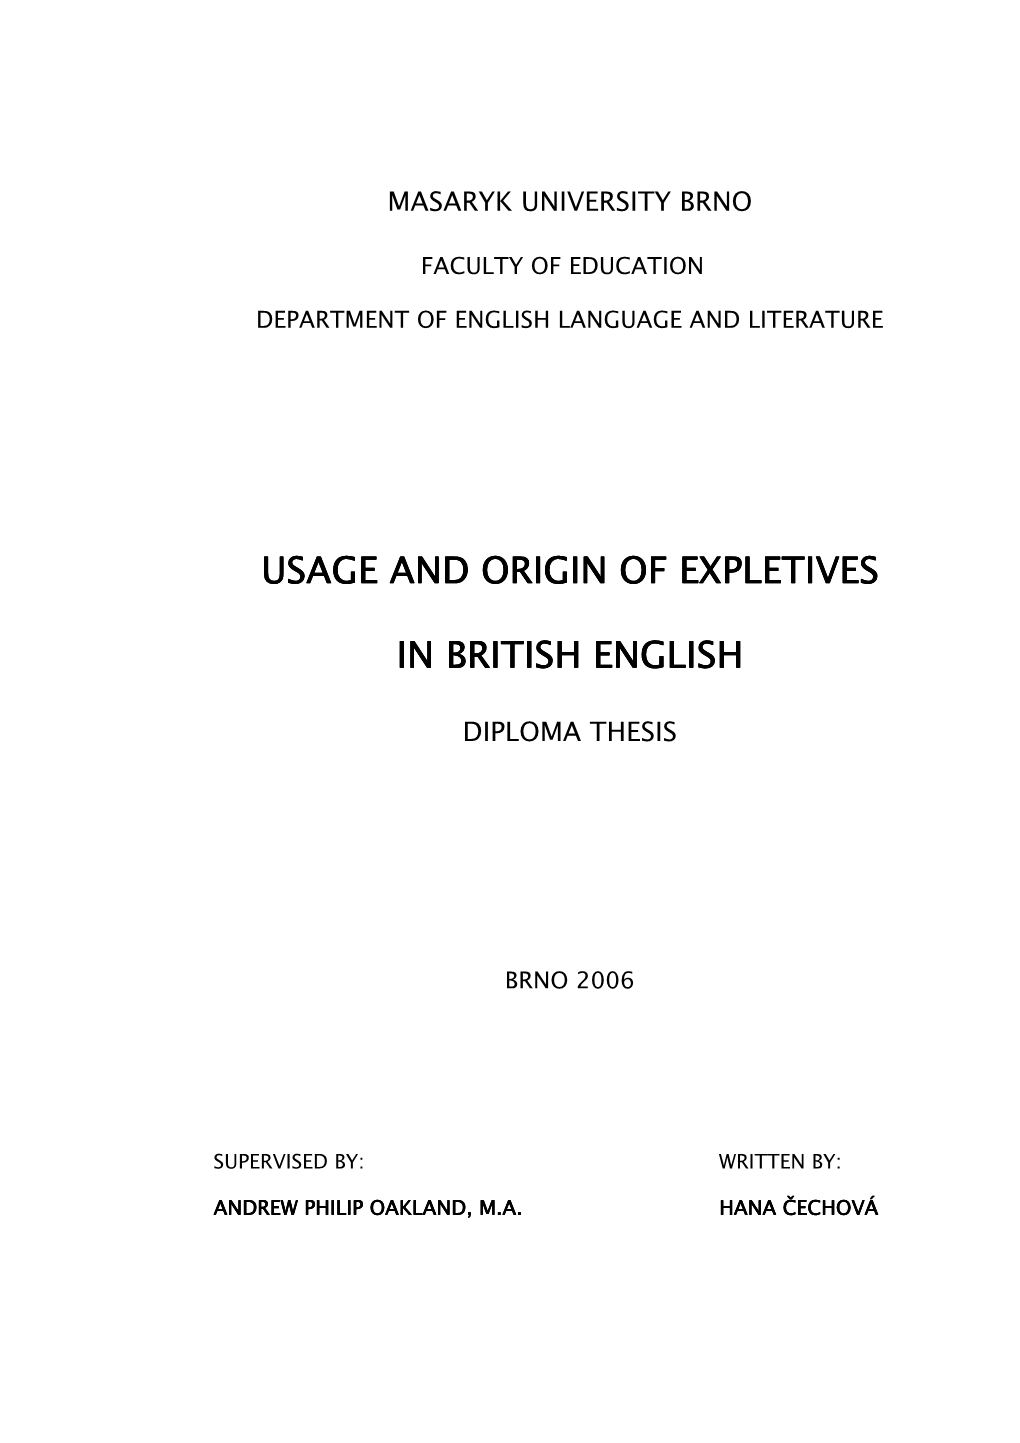 Usage and Origin of Expletives Usage